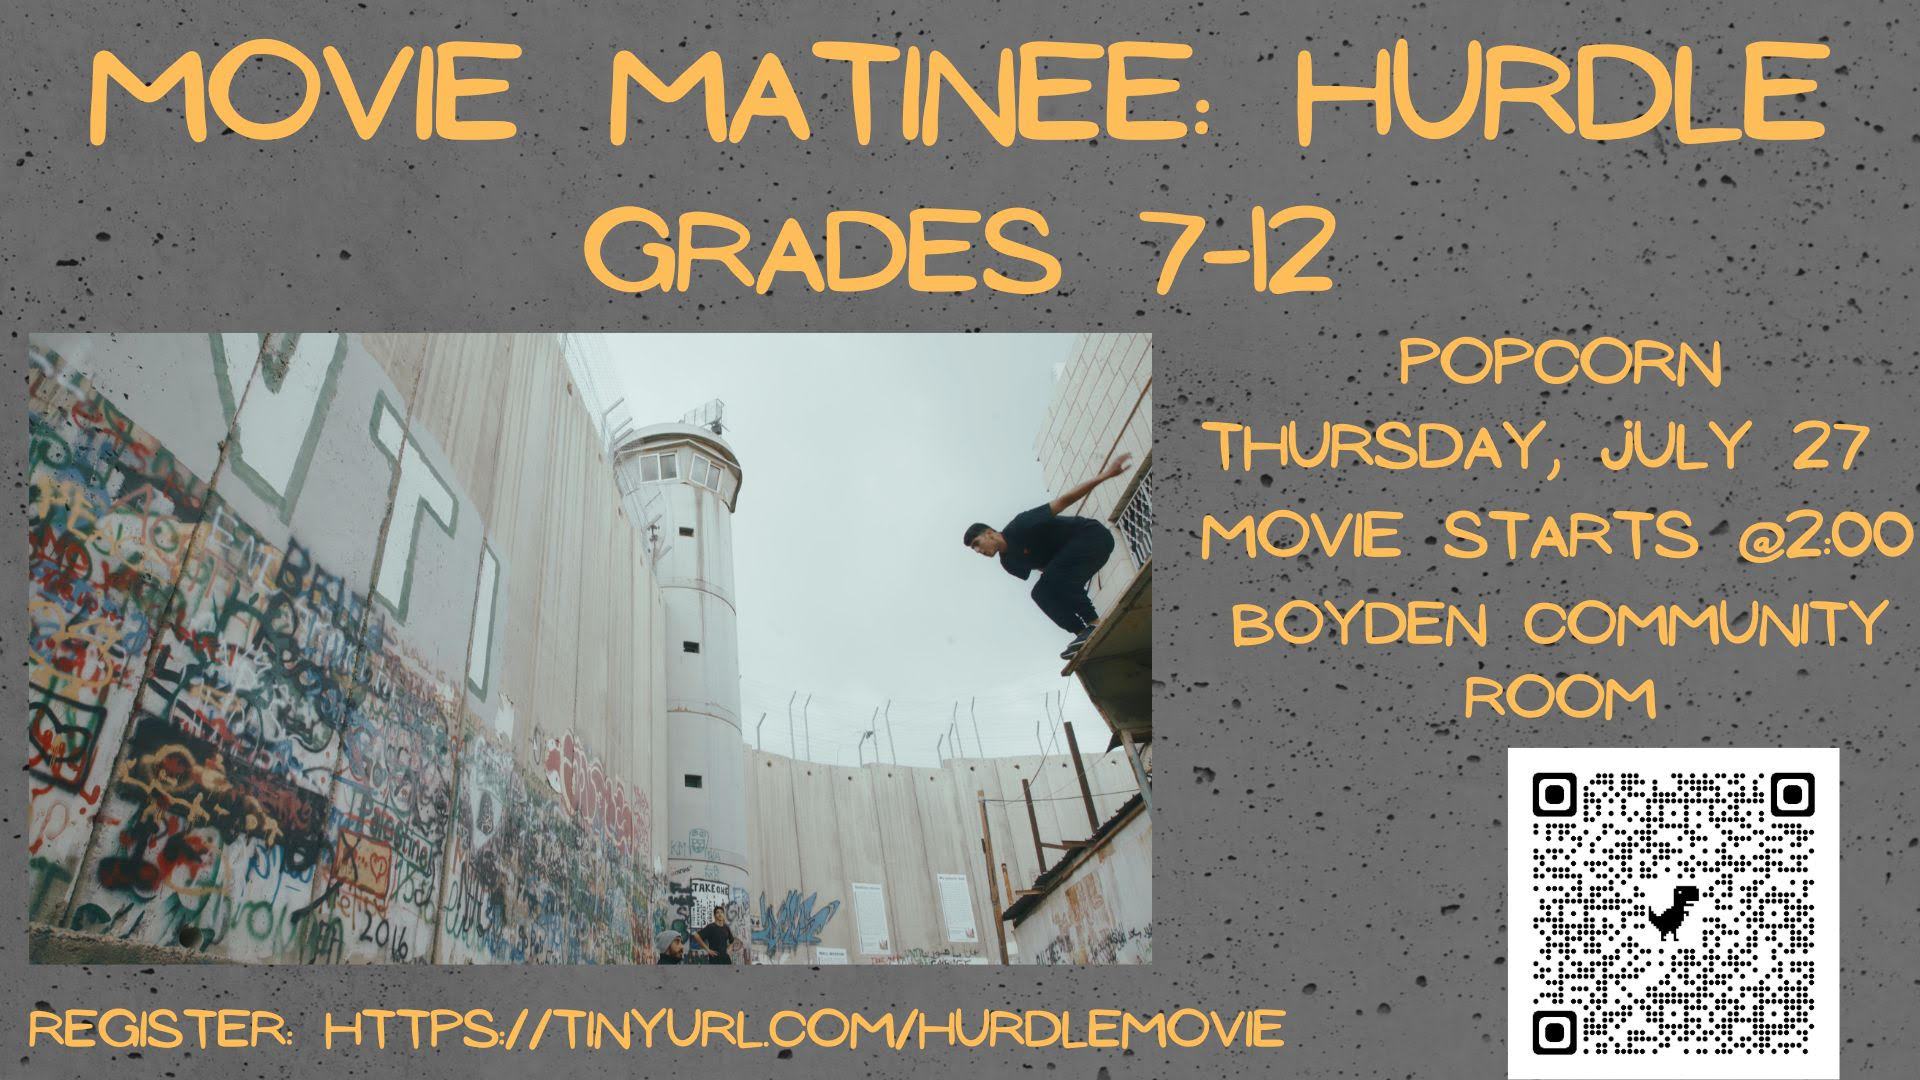 Movie Matinee - Hurdle